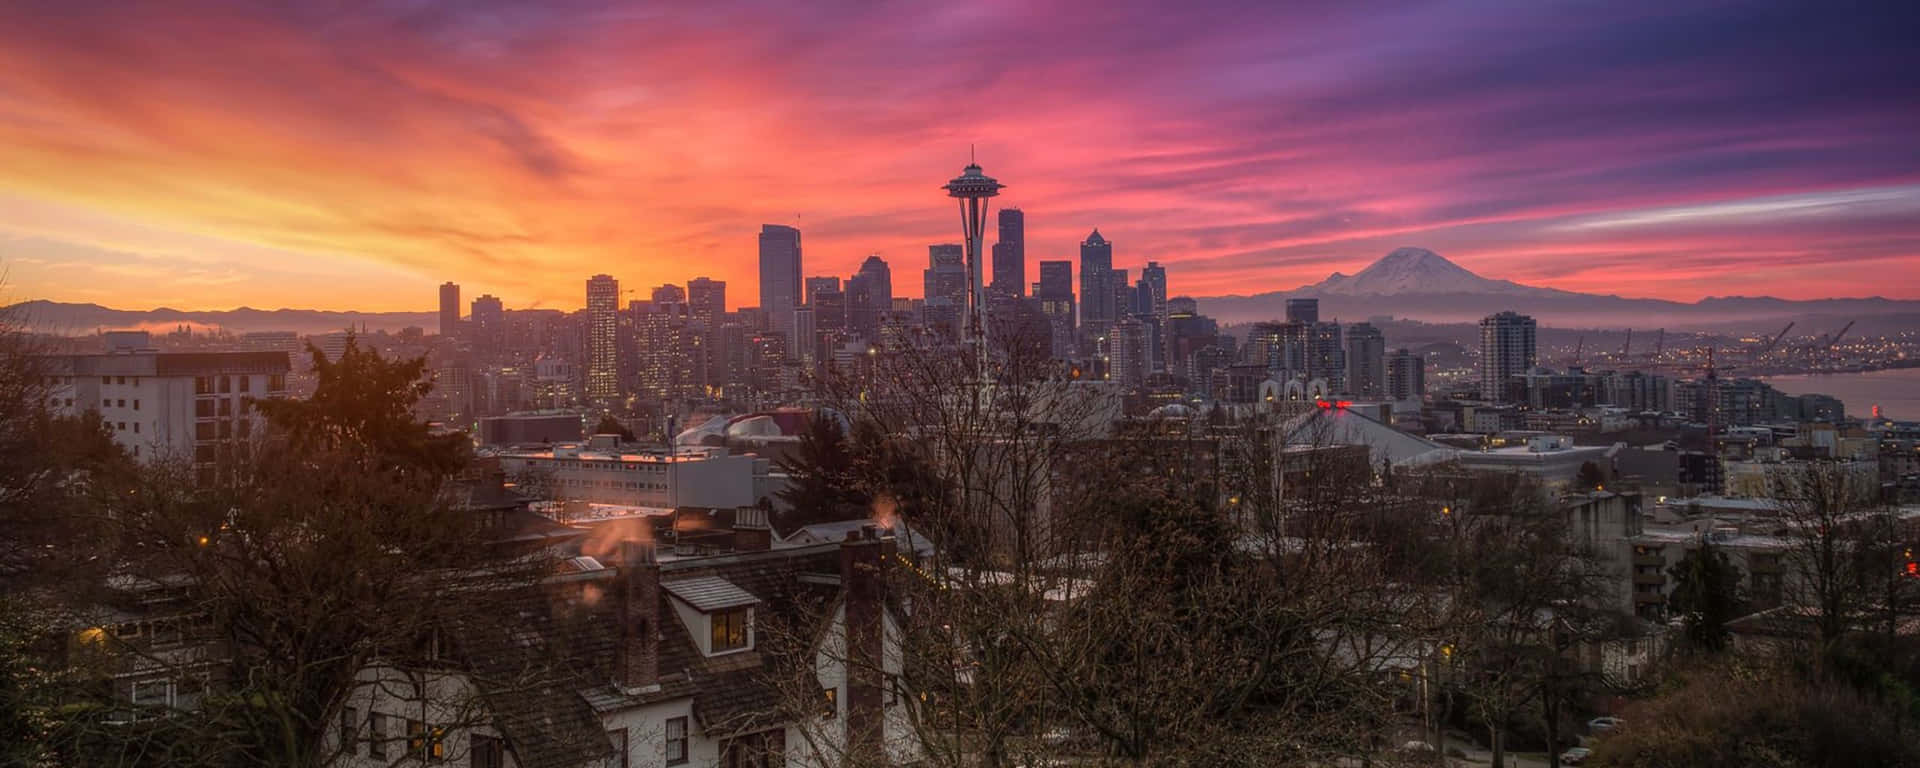 Ilbellissimo Skyline Di Seattle, Washington Sfondo